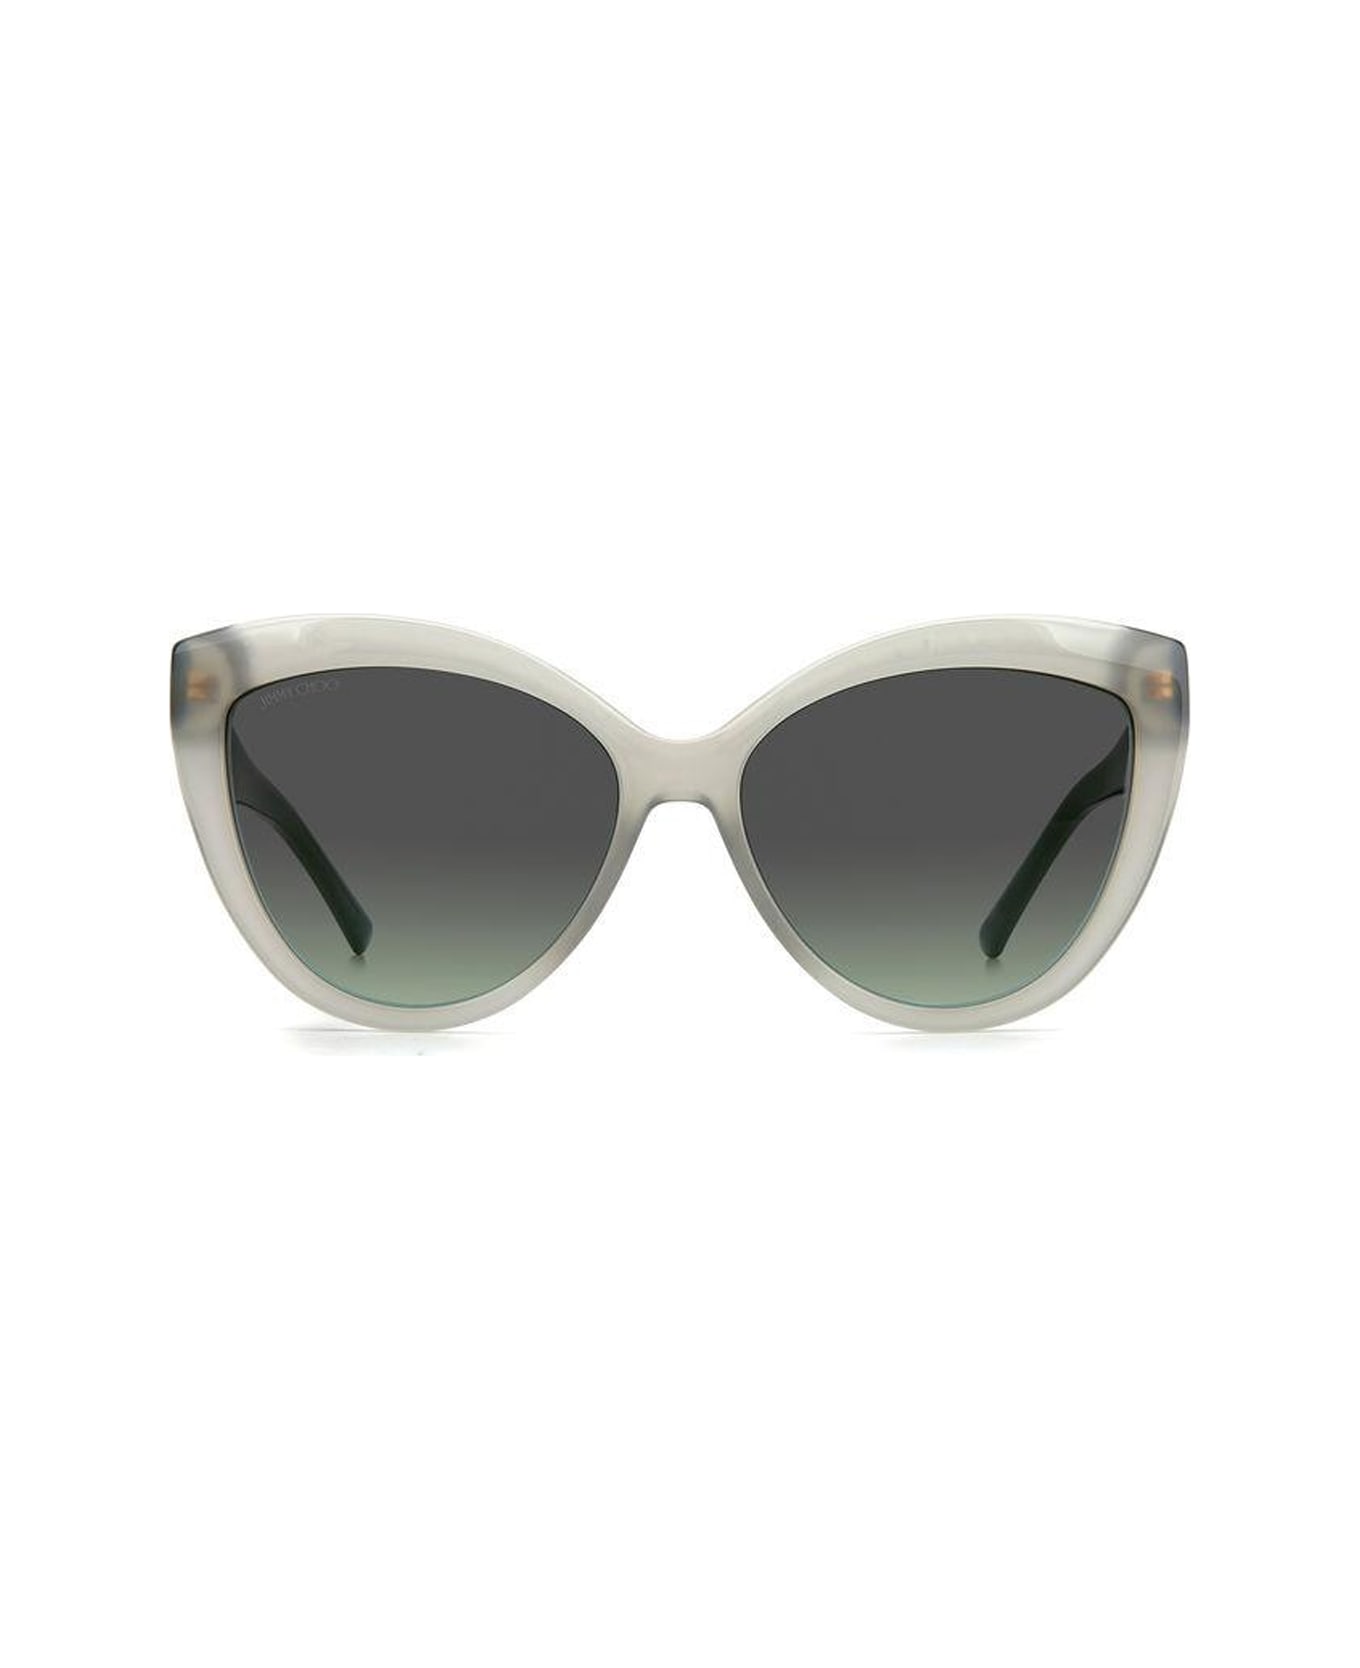 Jimmy Choo Eyewear Sinnie/g/s Sunglasses - Verde サングラス